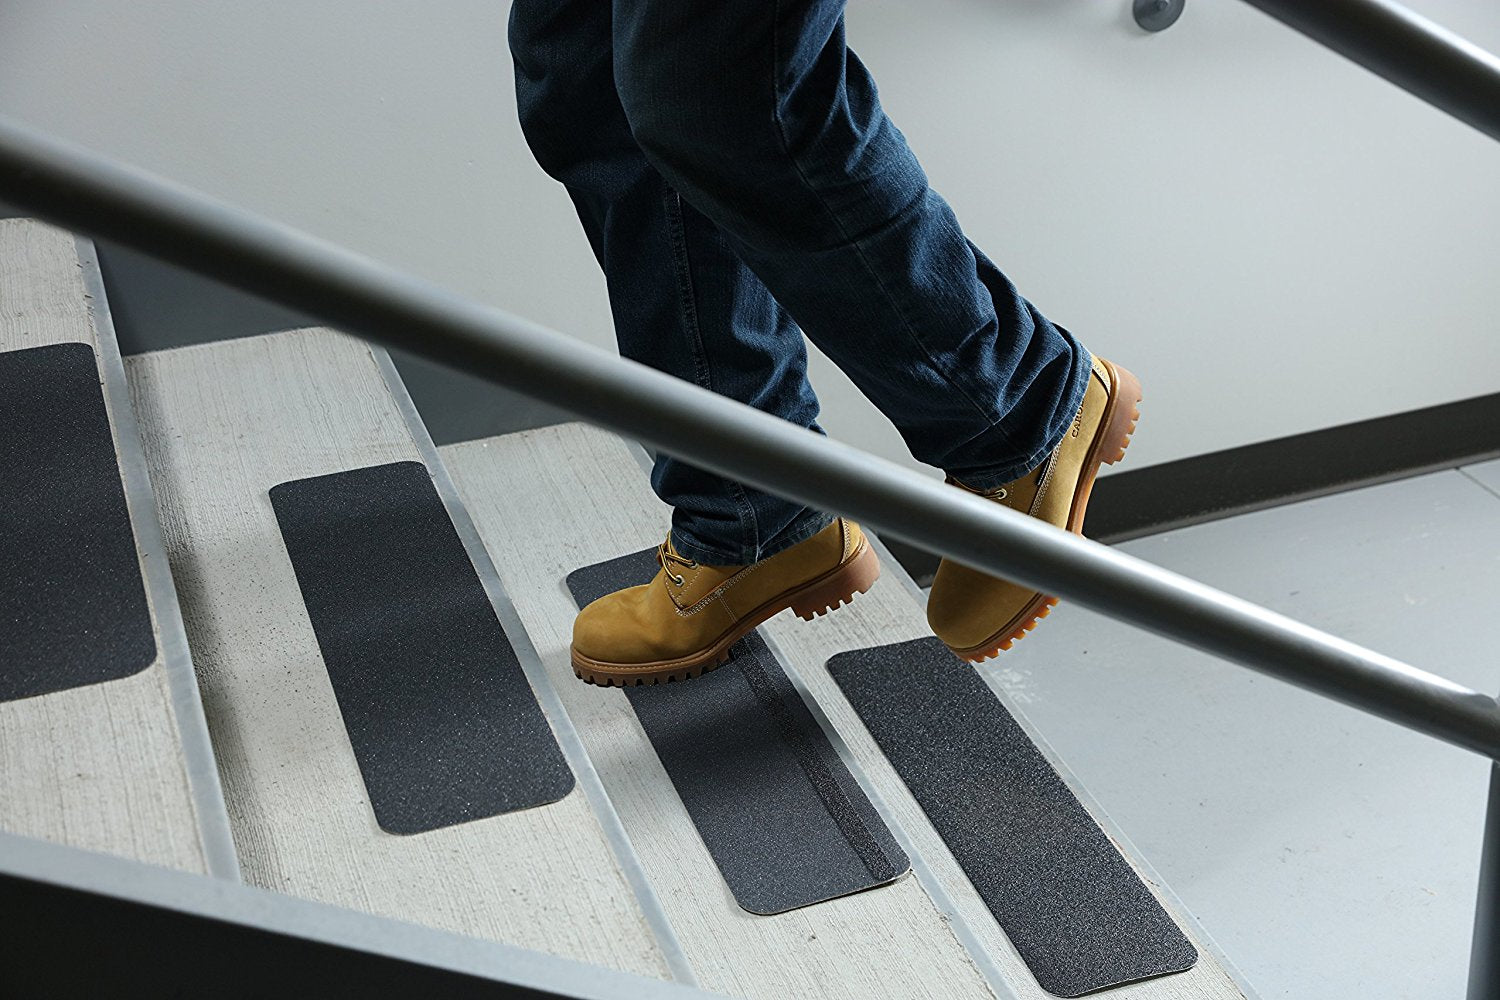 Tri-Step: Slip-Resistant Mat for Indoor/Outdoor Wet Environments